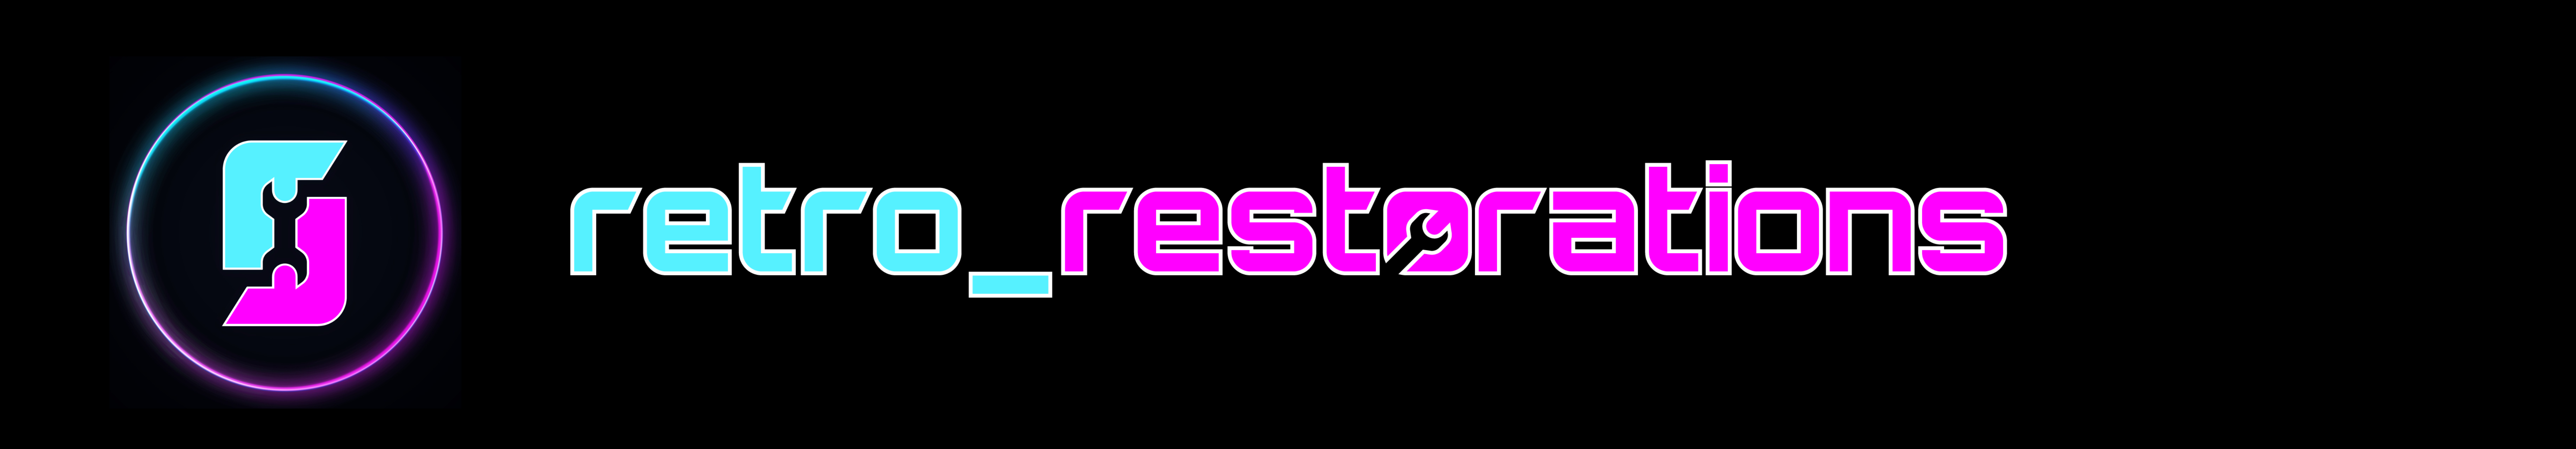 retro_restoration